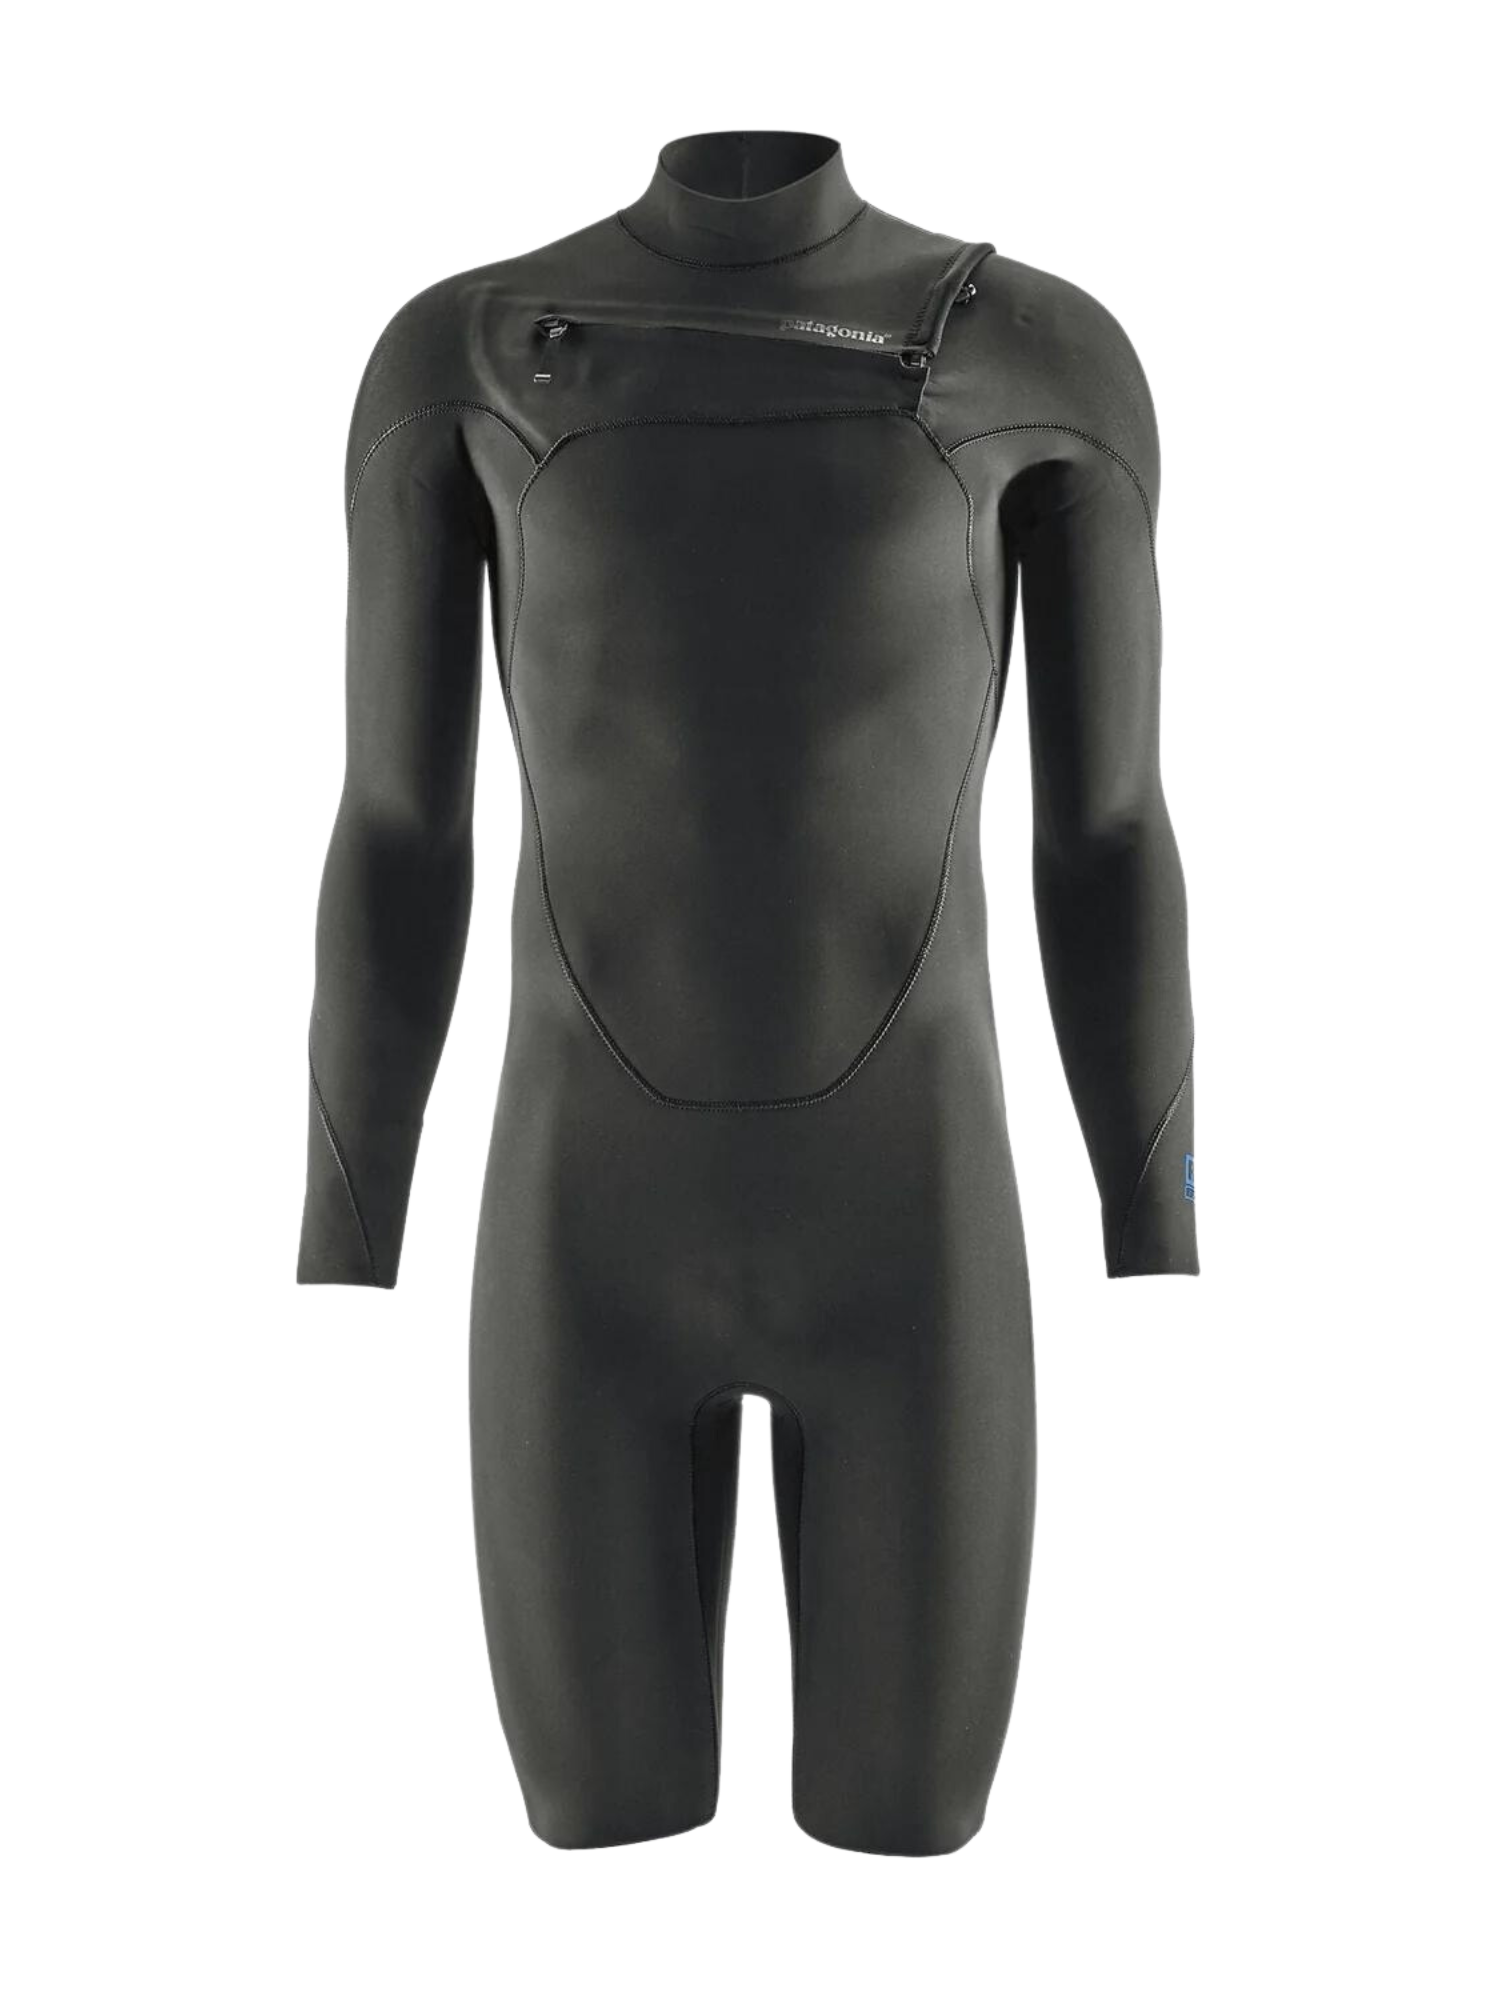 Patagonia Men's R1® Lite Yulex® Front-Zip Long-Sleeved Spring Suit